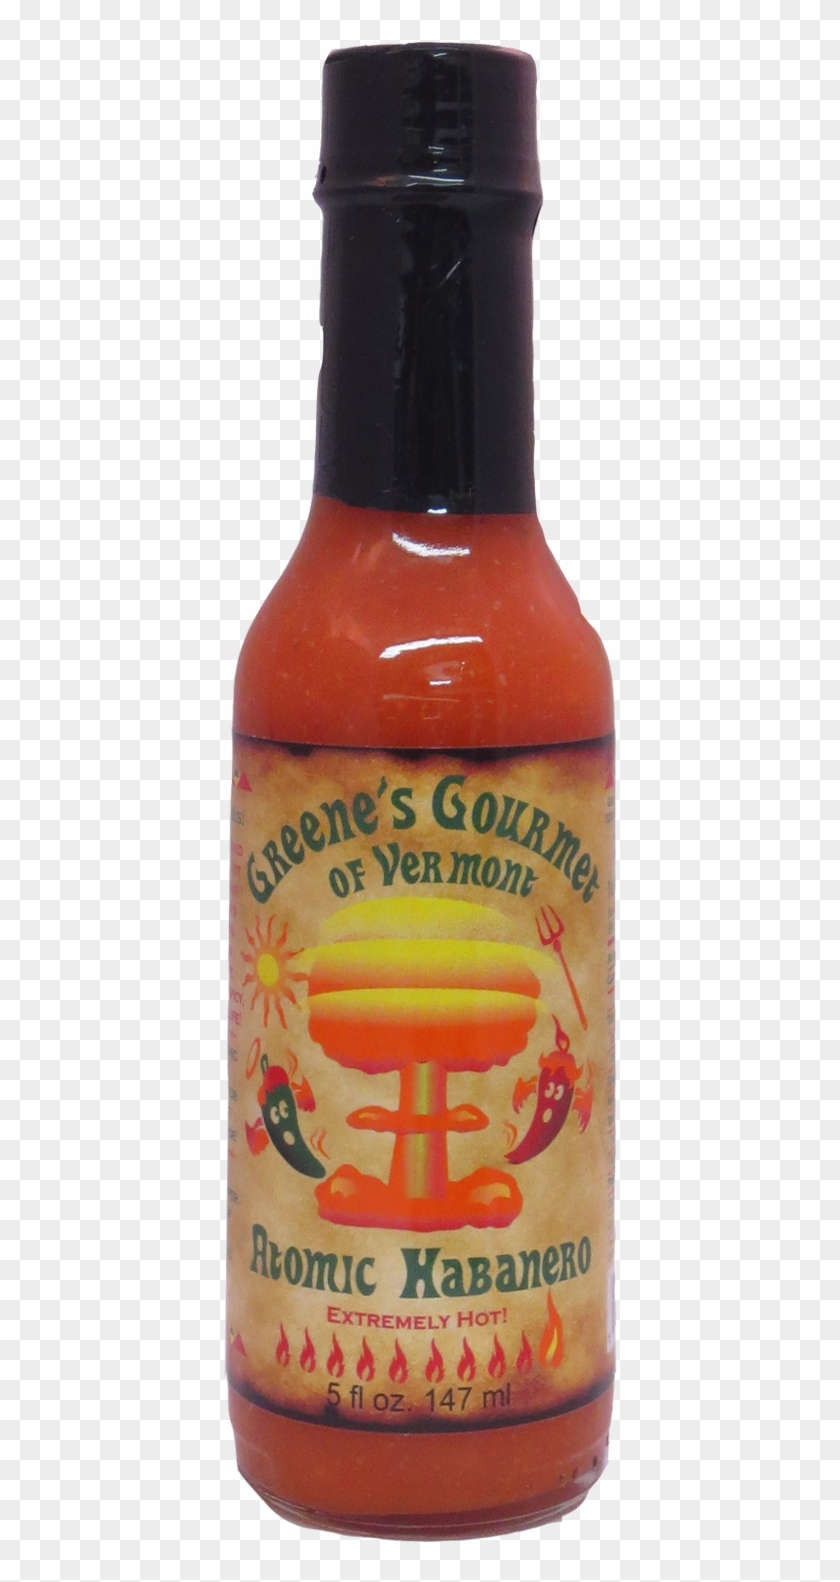 Greene's Gourmet Atomic Habanero Hot Sauce - Glass Bottle Clipart